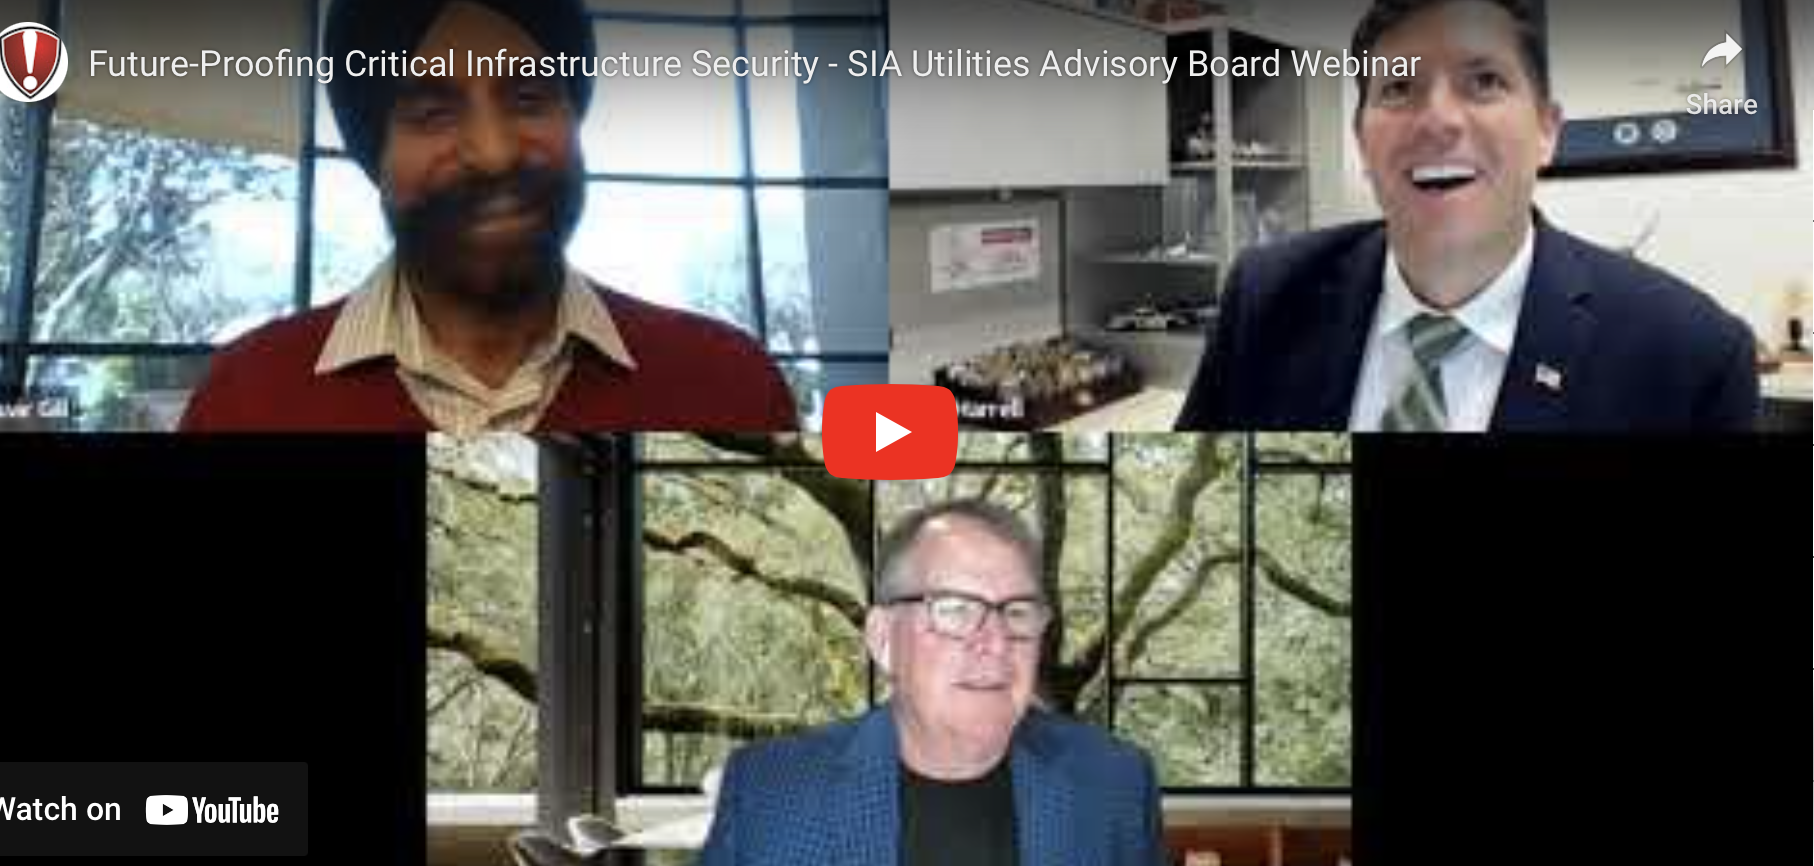 Future-Proofing Critical Infrastructure Security - SIA Utilities Advisory Board Webinar